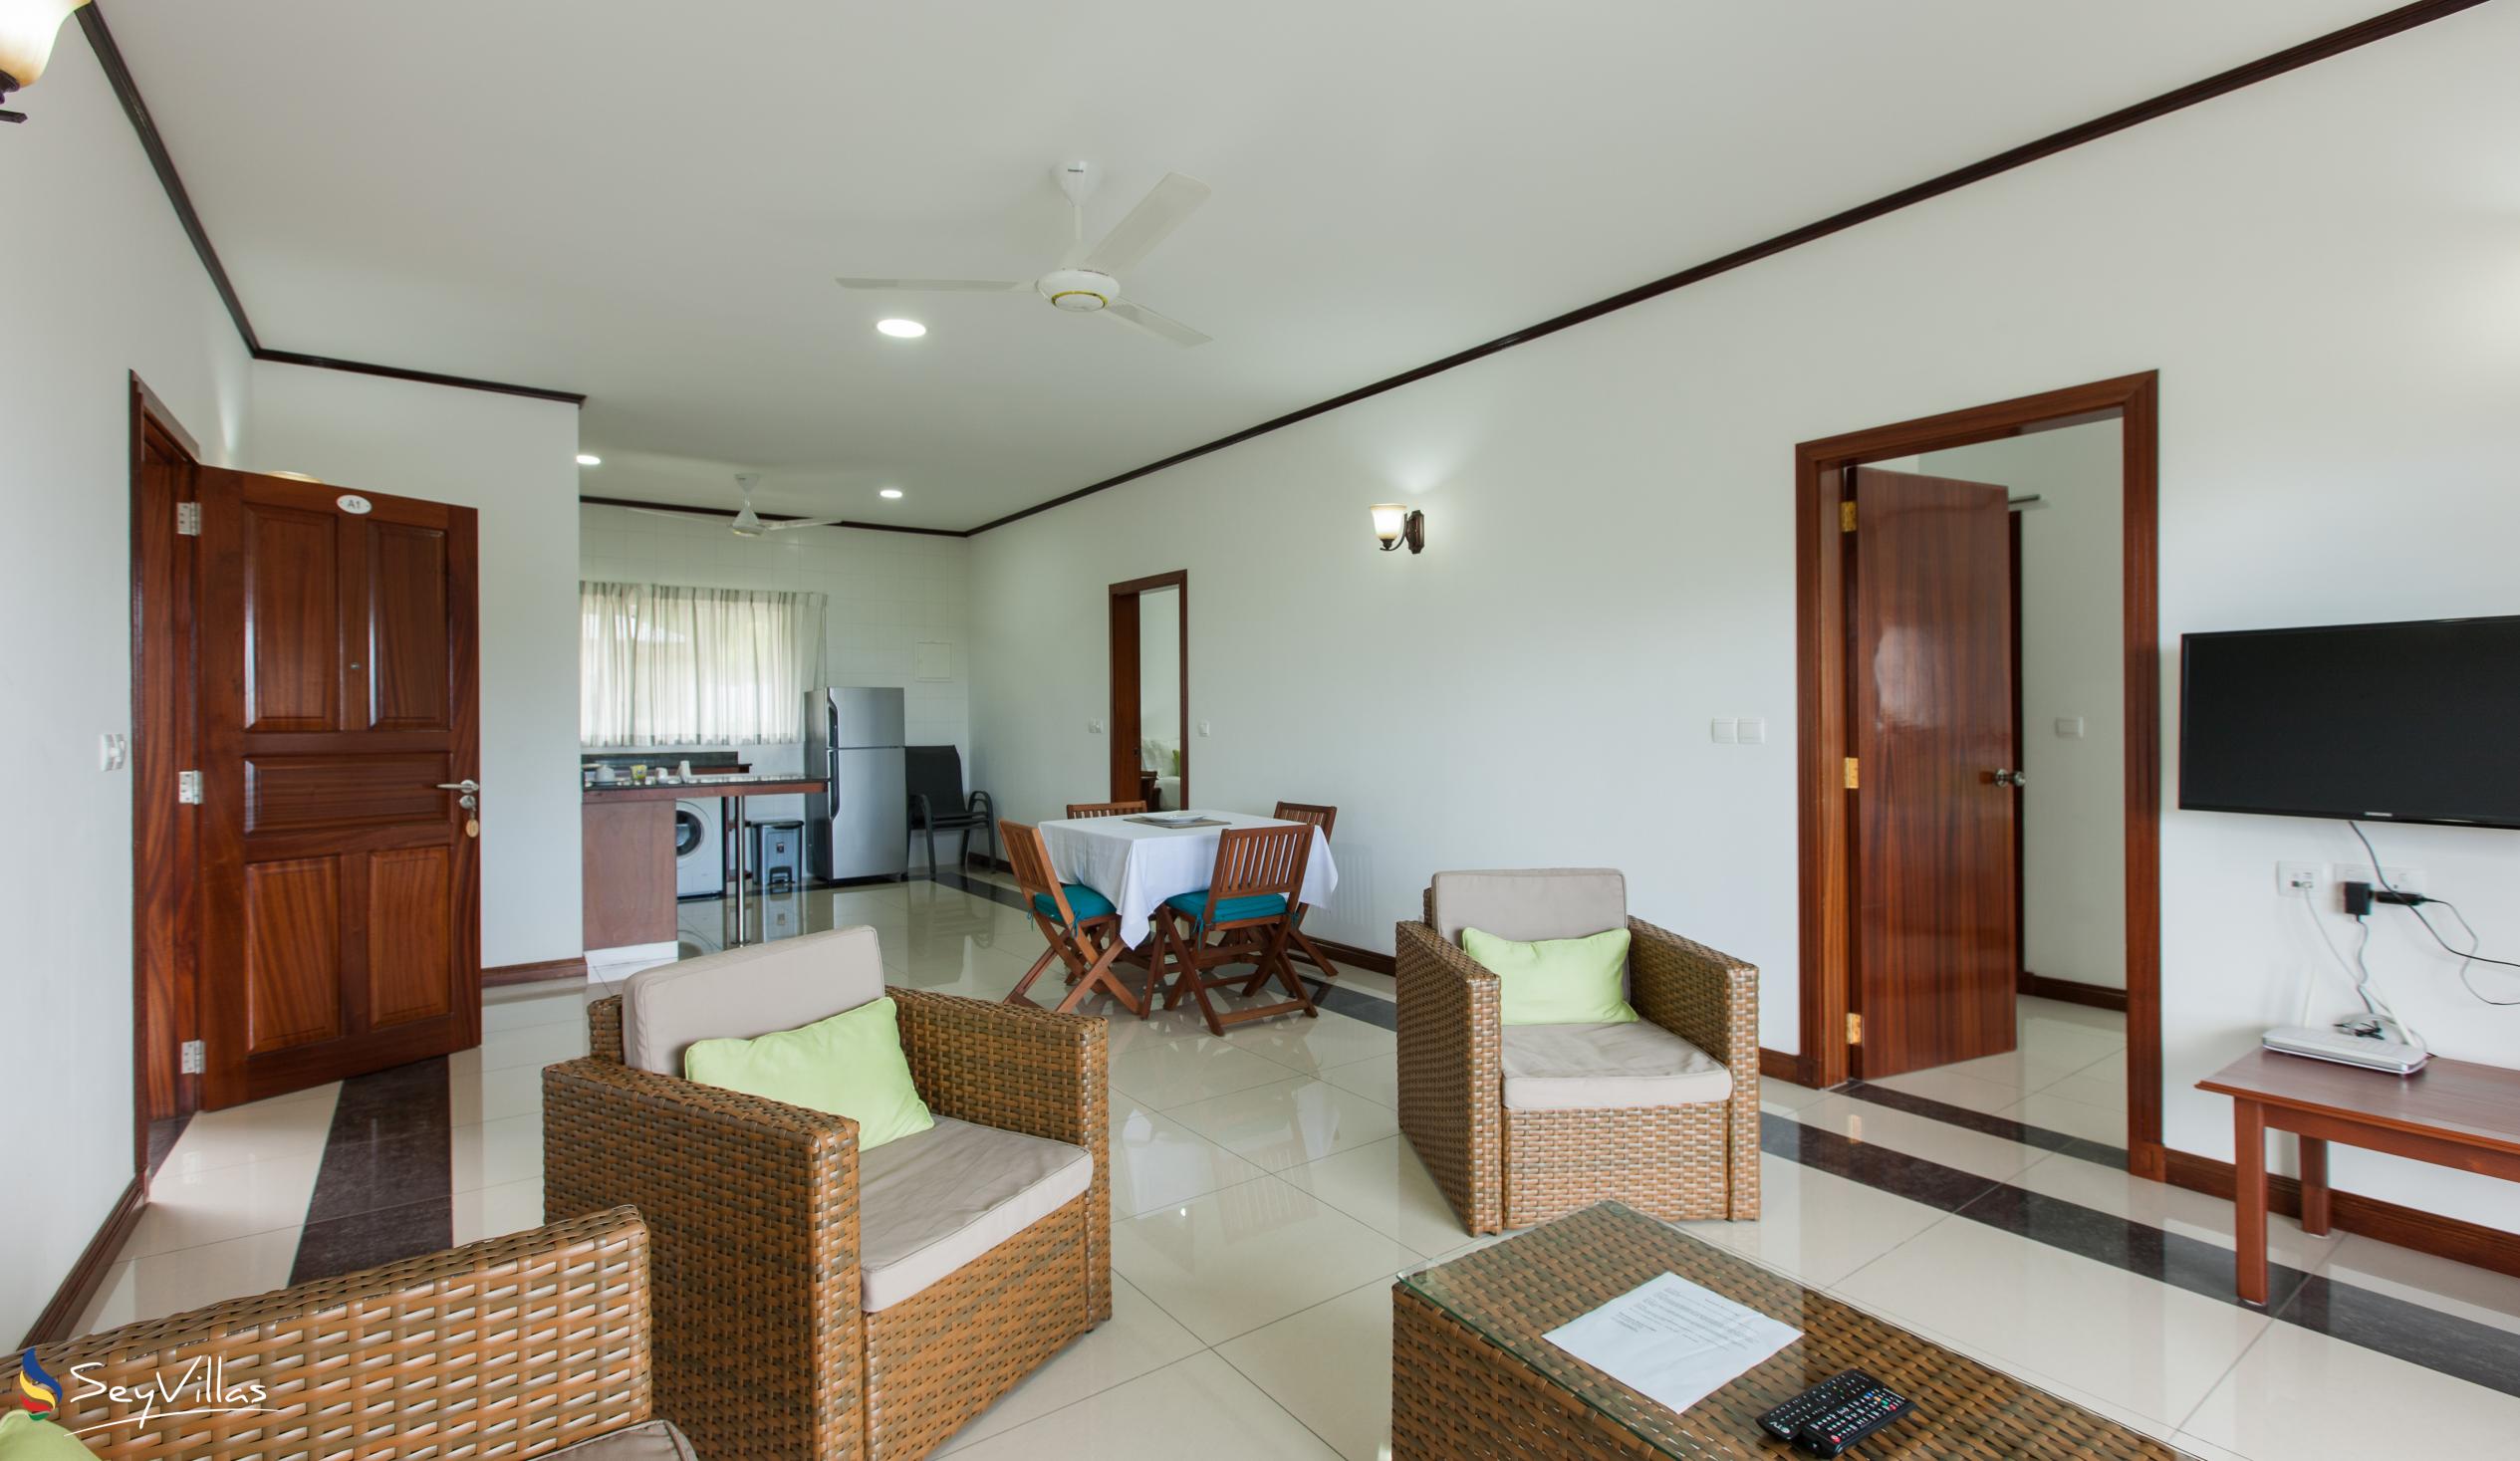 Photo 51: Bambous River Lodge - 2-Bedroom Apartment - Mahé (Seychelles)